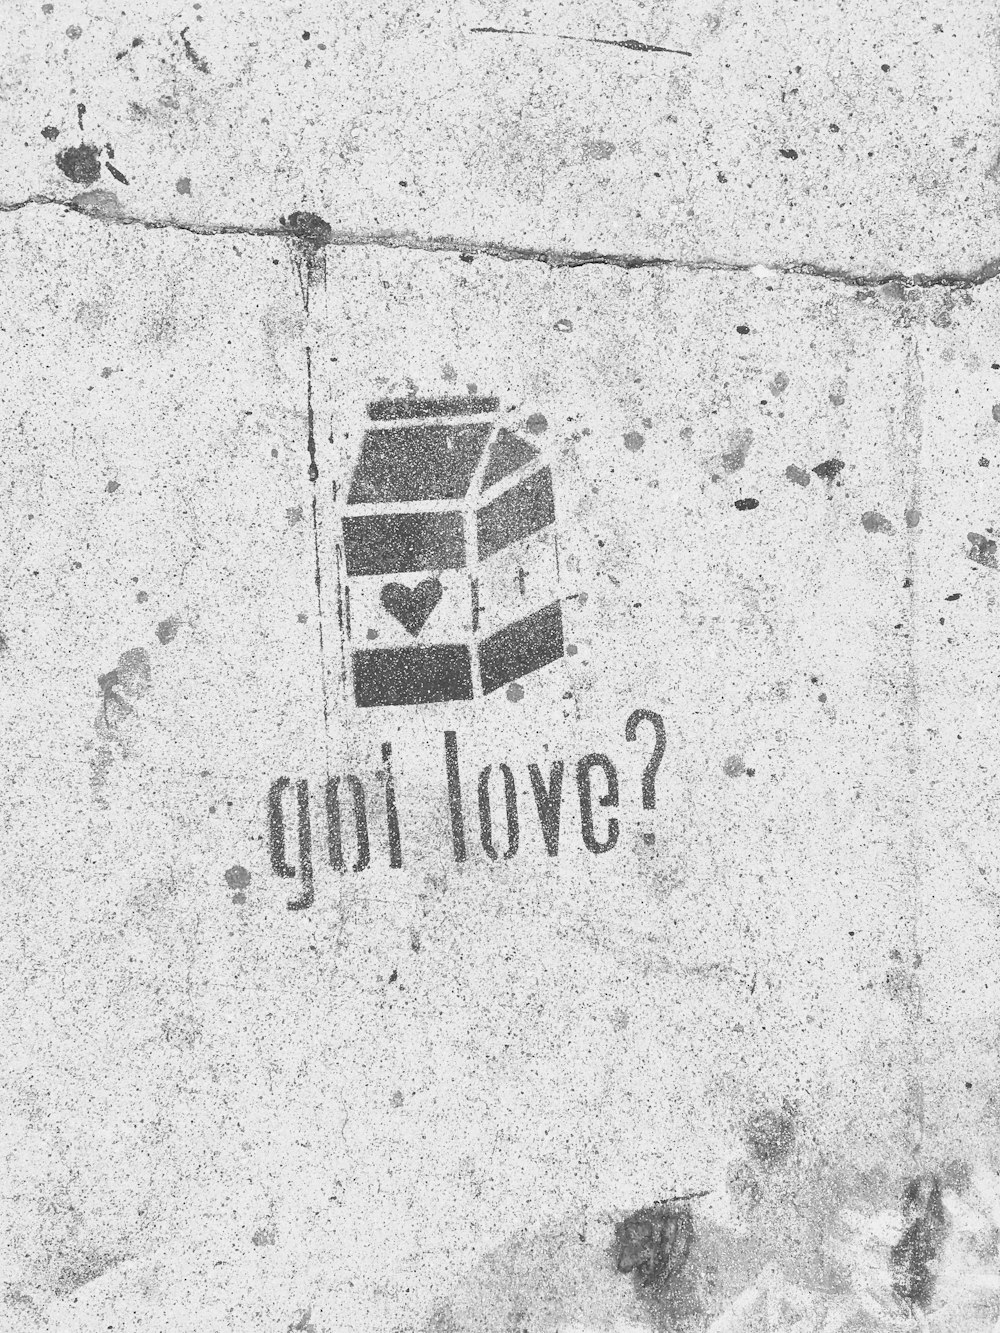 got love? with milk carton graffiti on concrete wall